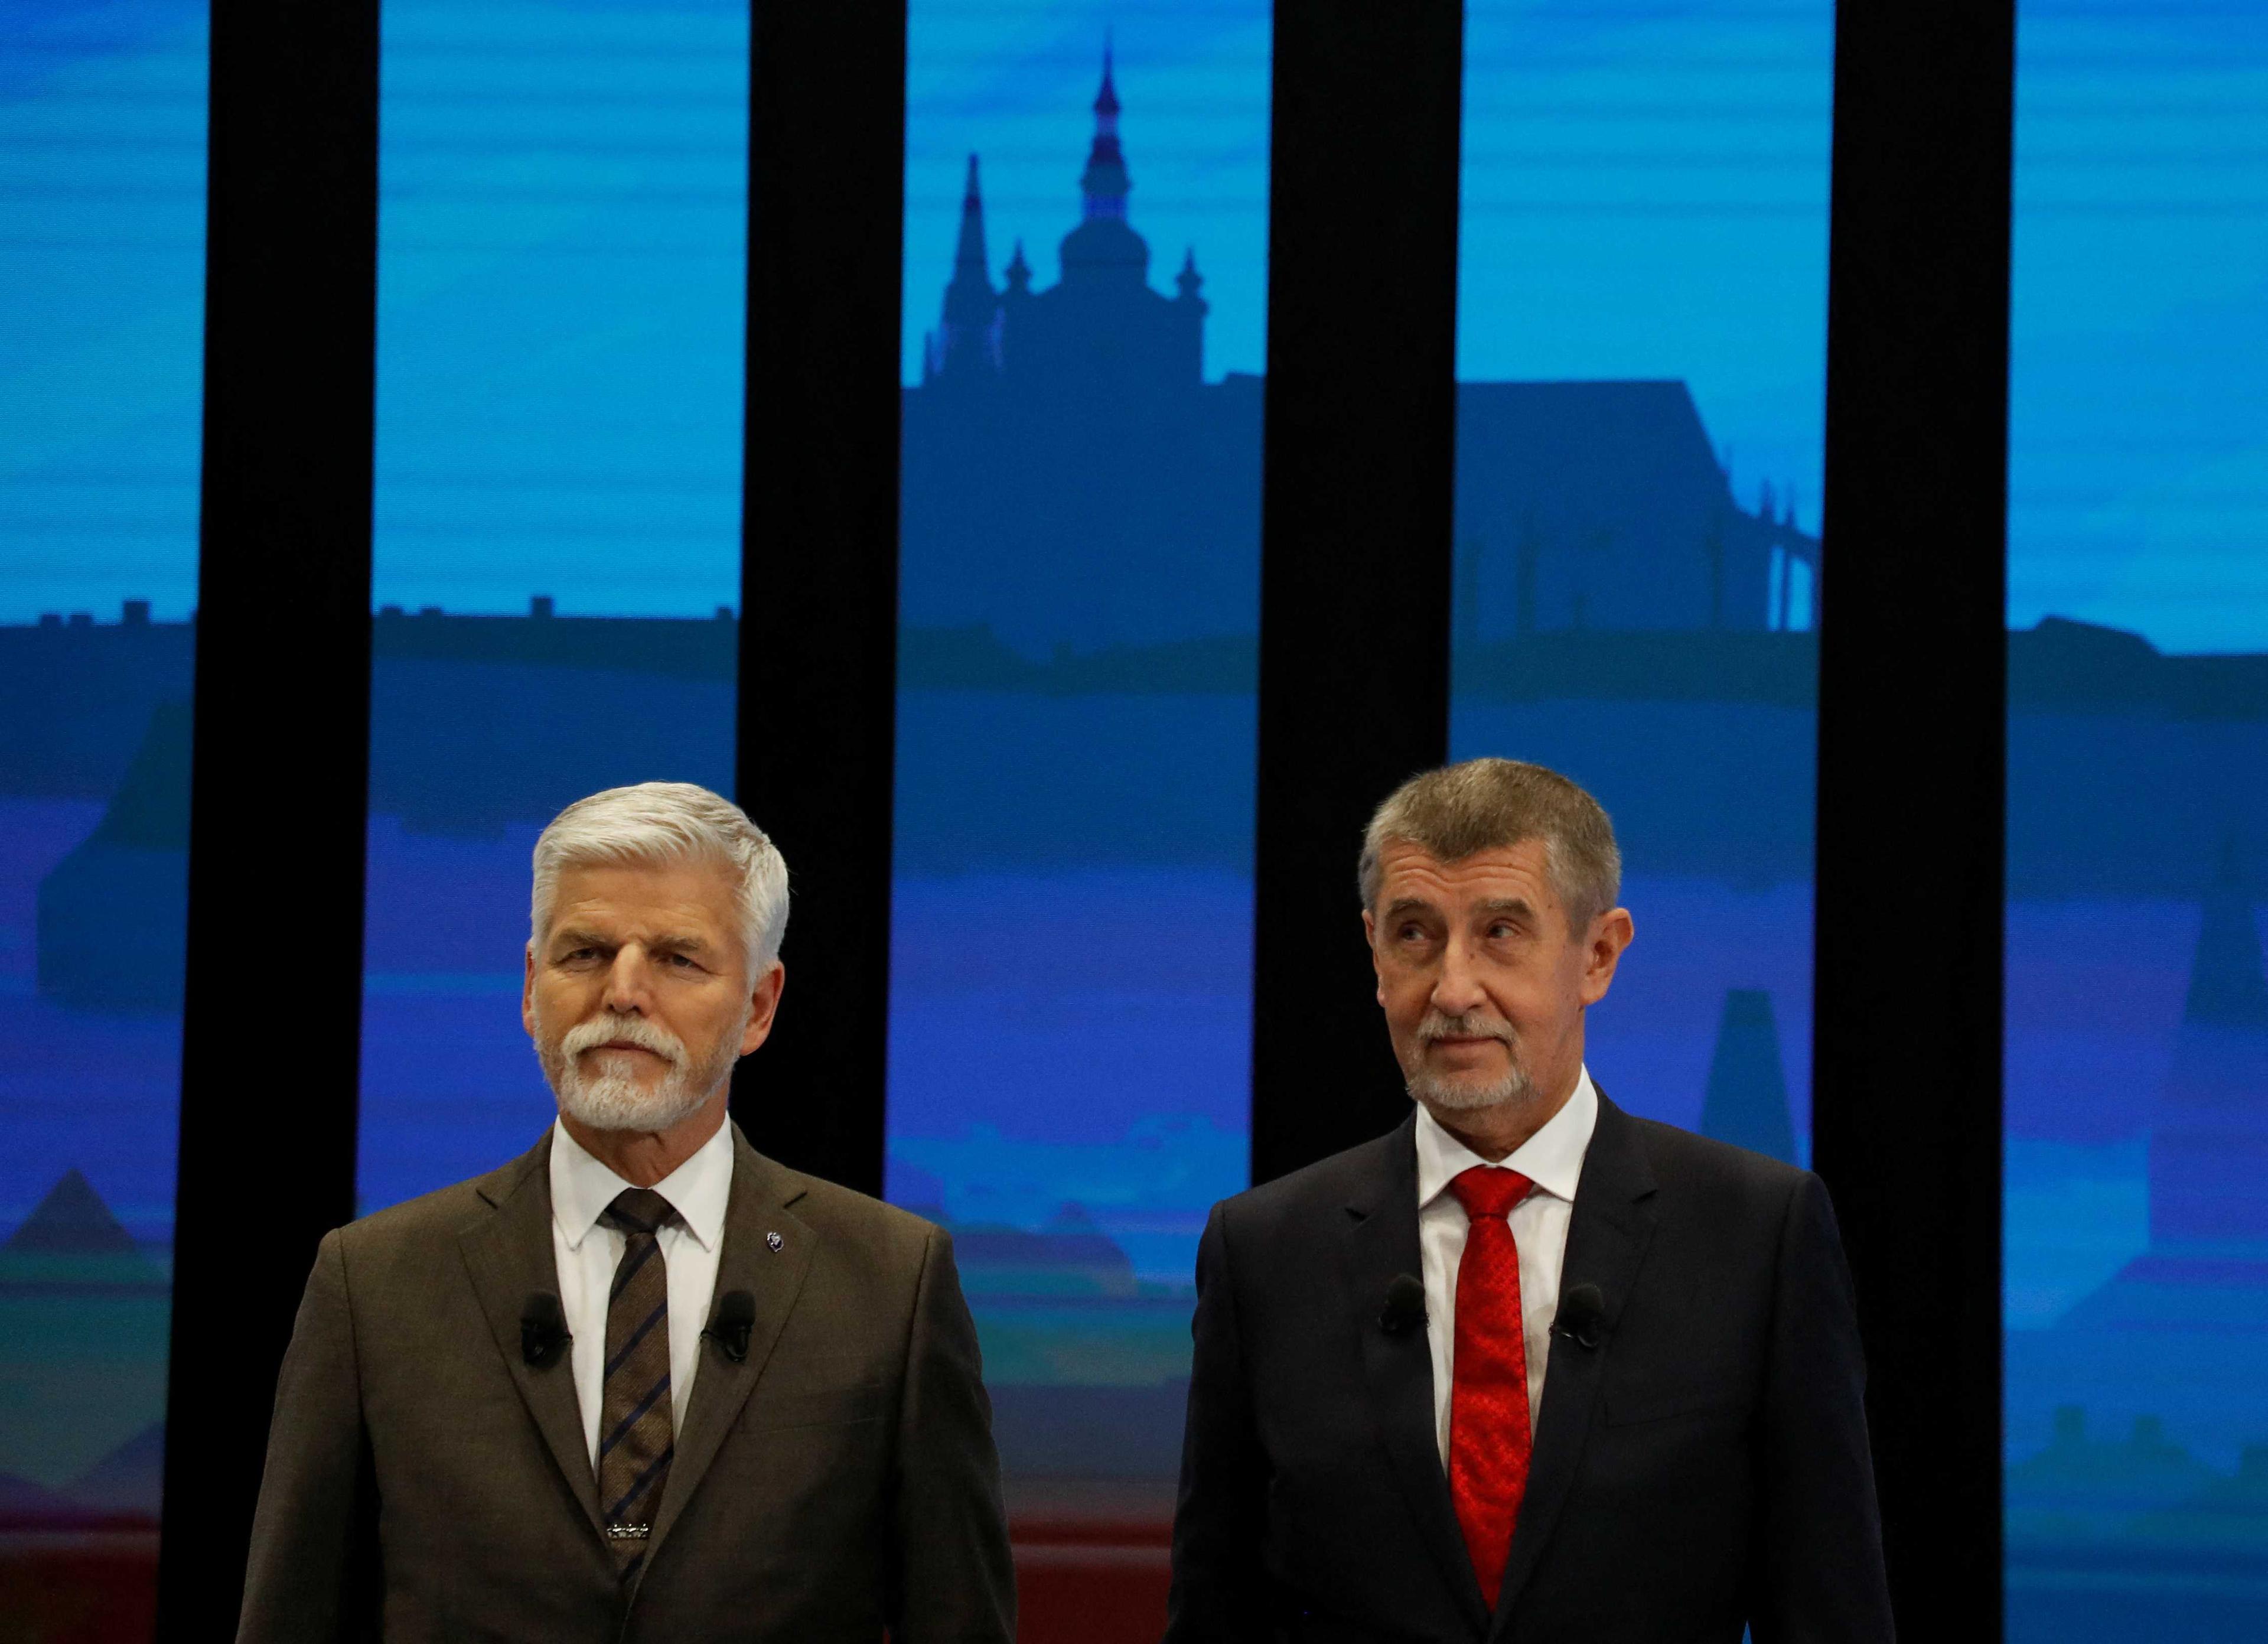 Calon Presiden Petr Pavel dan Andrej Babis akan bertanding selepas masing-masing menerima 35.4% dan 34.99% undian pada pusingan pertama. Gambar: Reuters